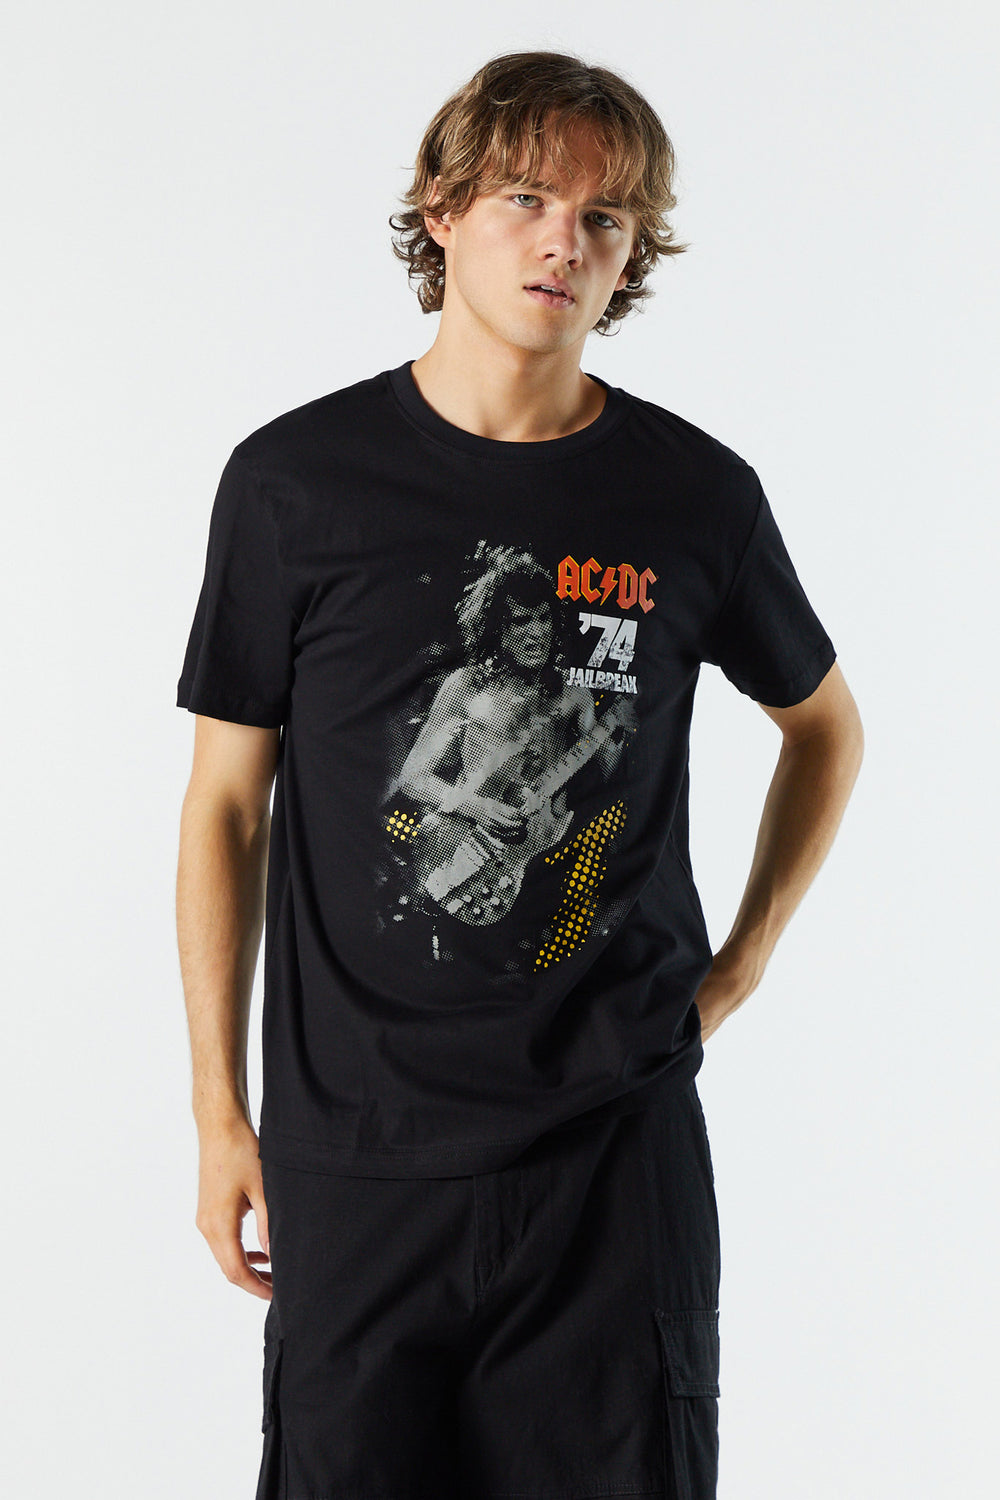 74 Jailbreak T-Shirt  Shop the AC/DC Official Store